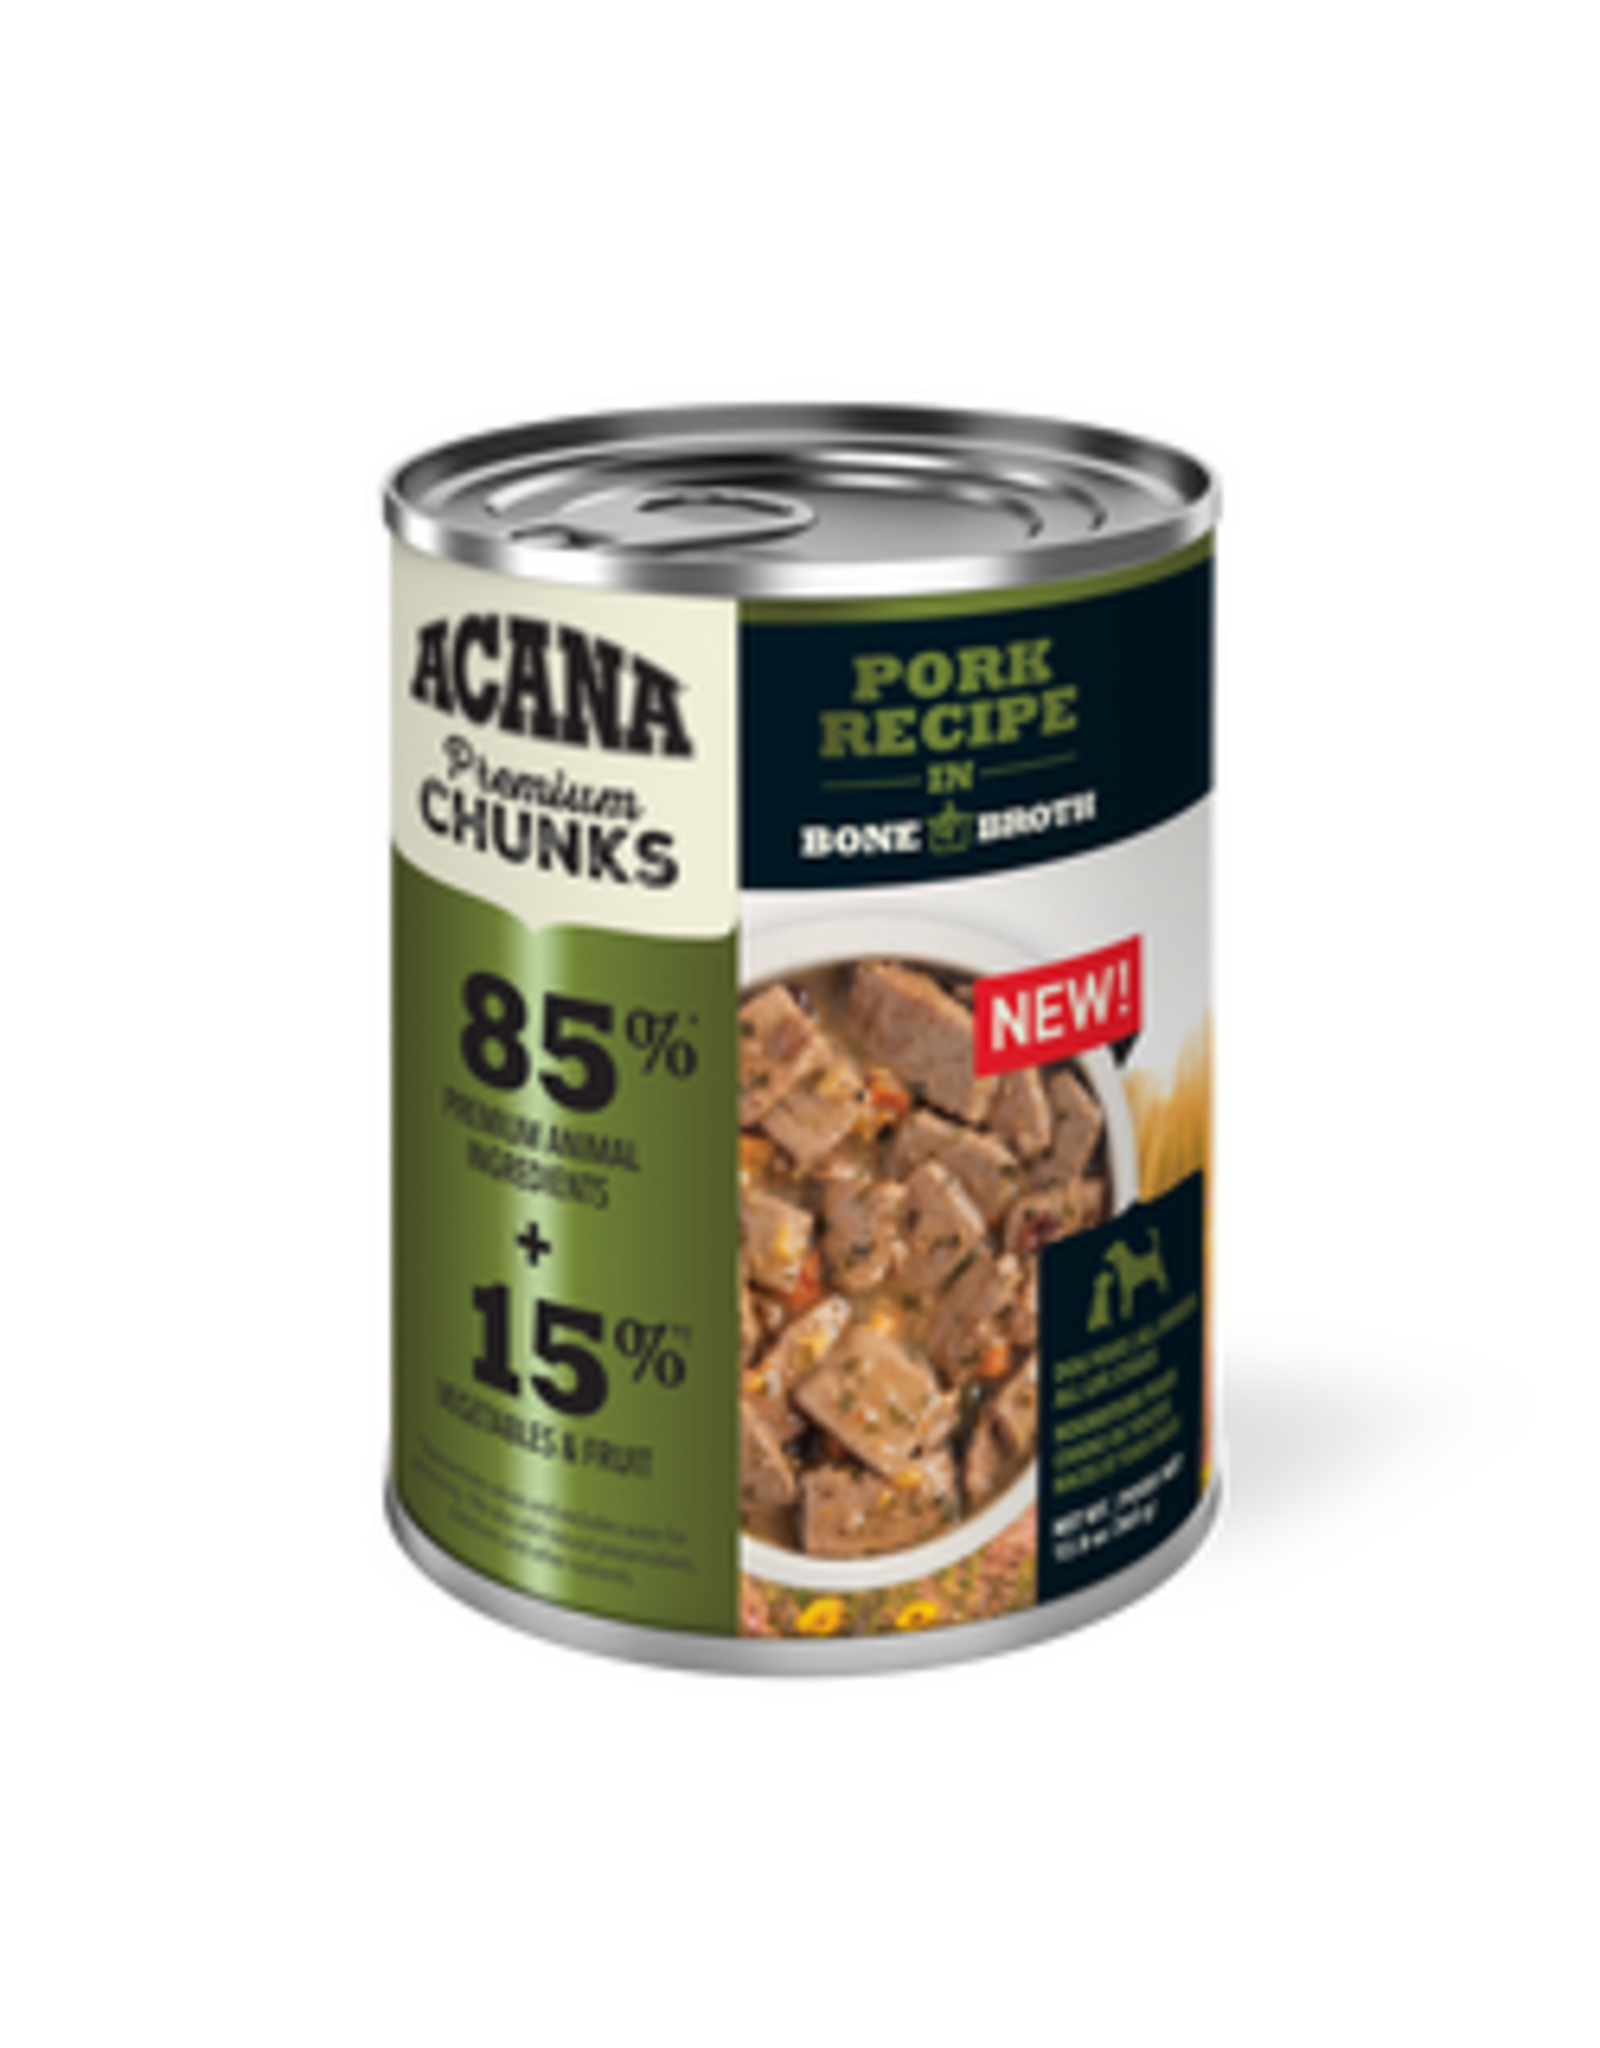 Acana Premium Chunks Pork Recipe in Bone Broth 363g